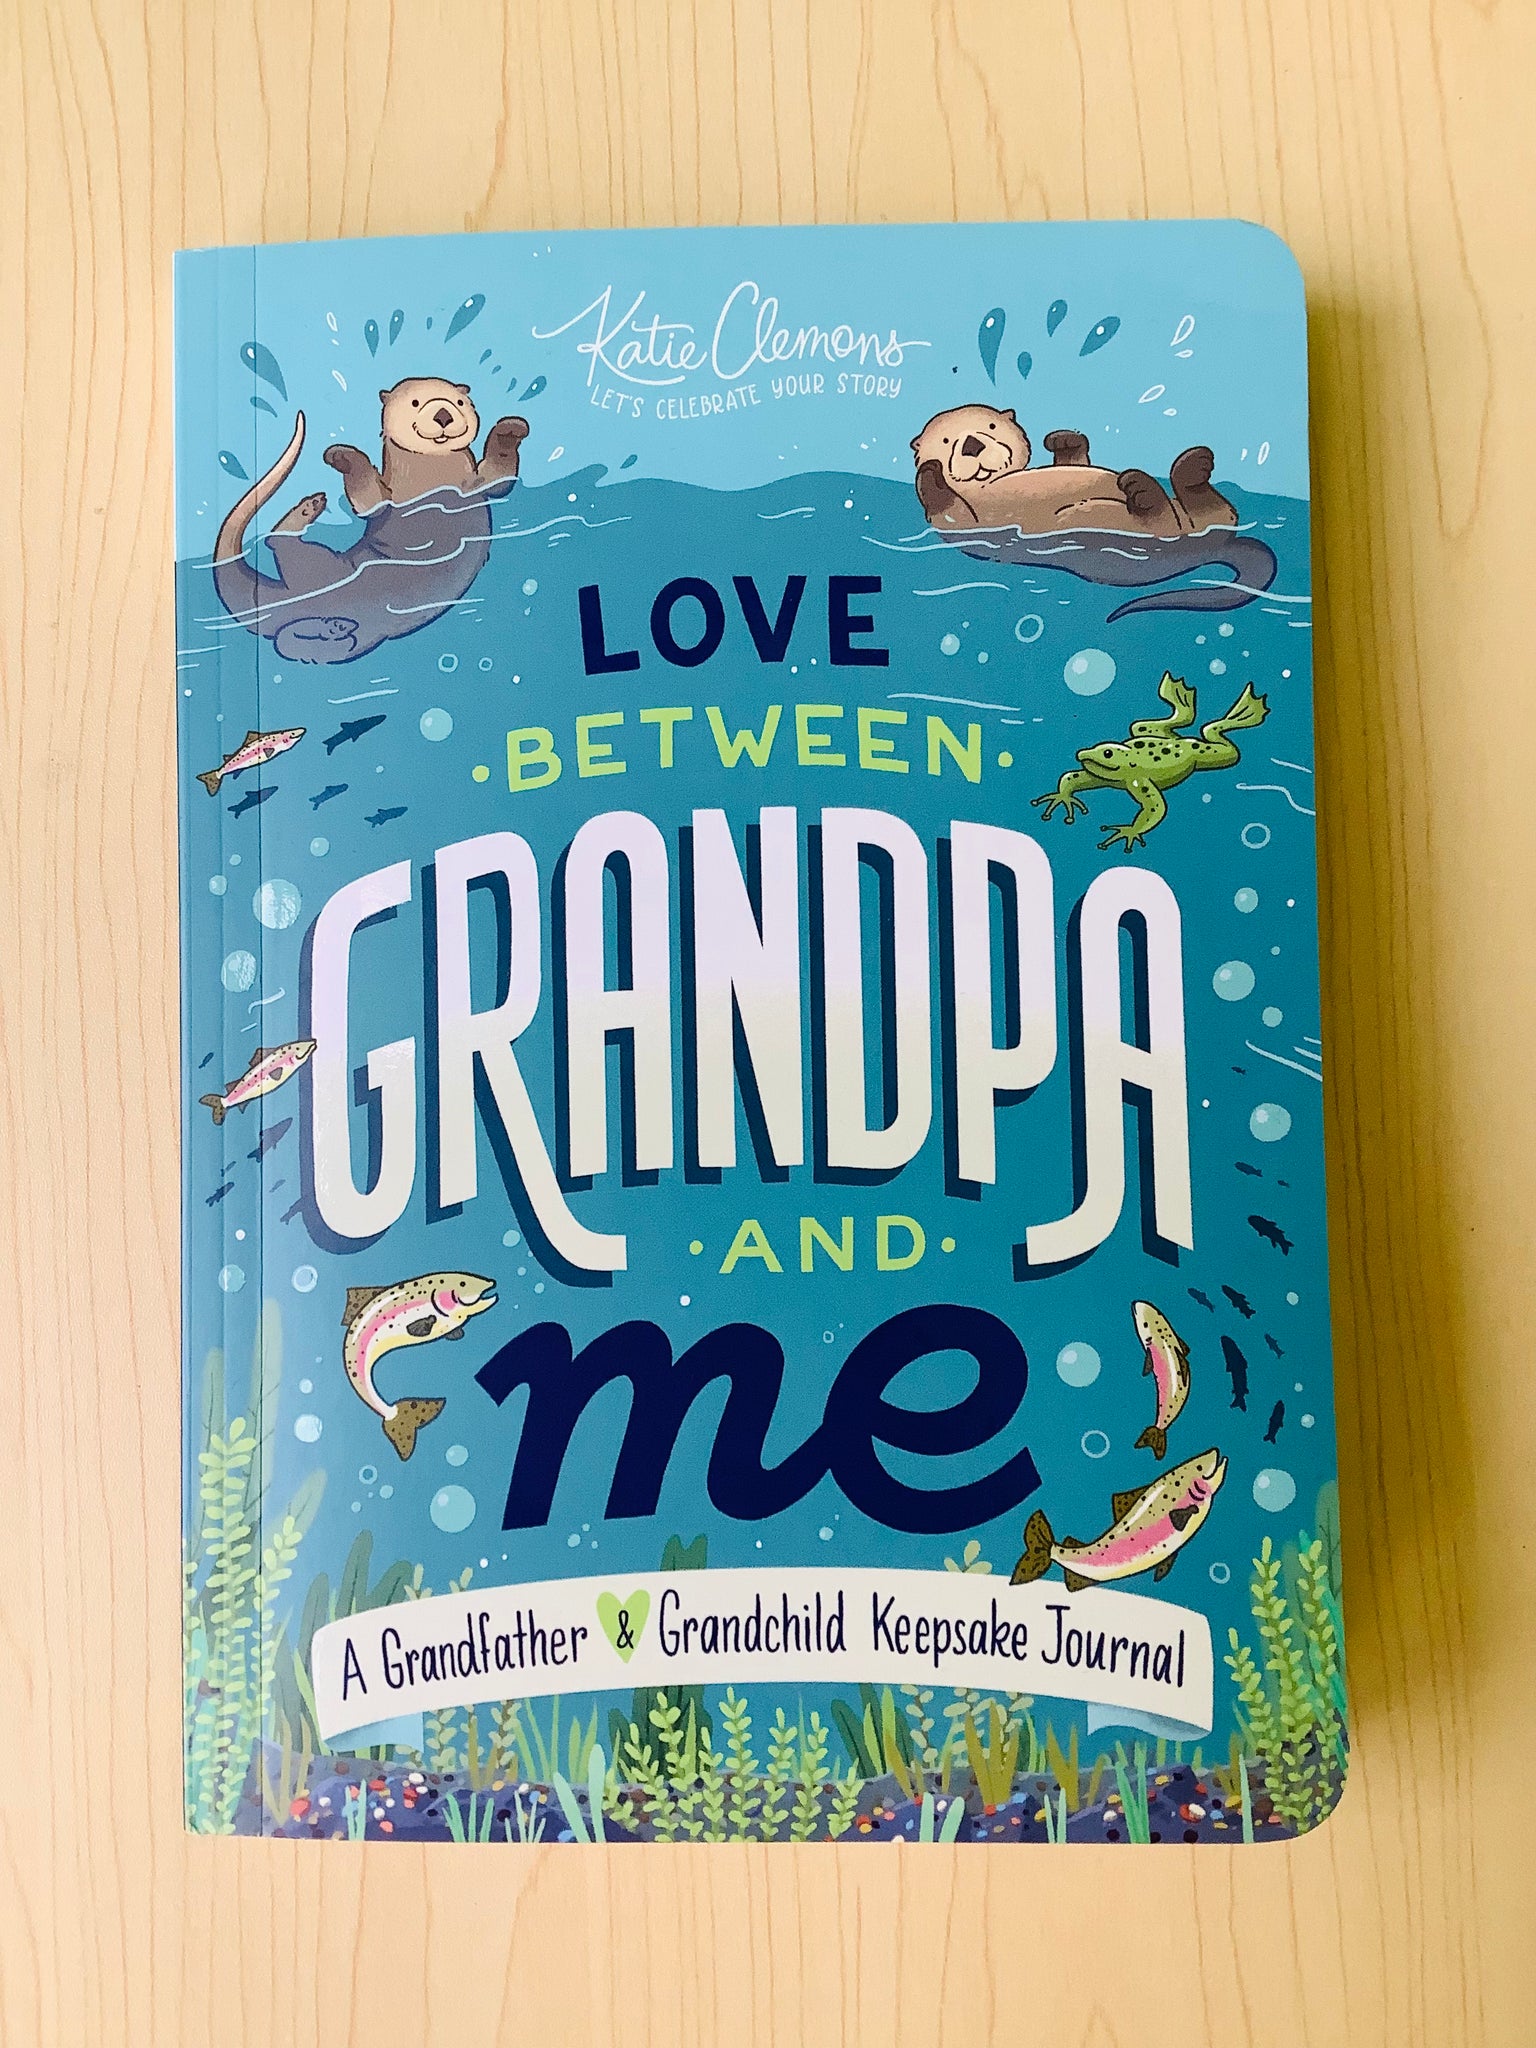 Love Between Grandpa and Me Journal